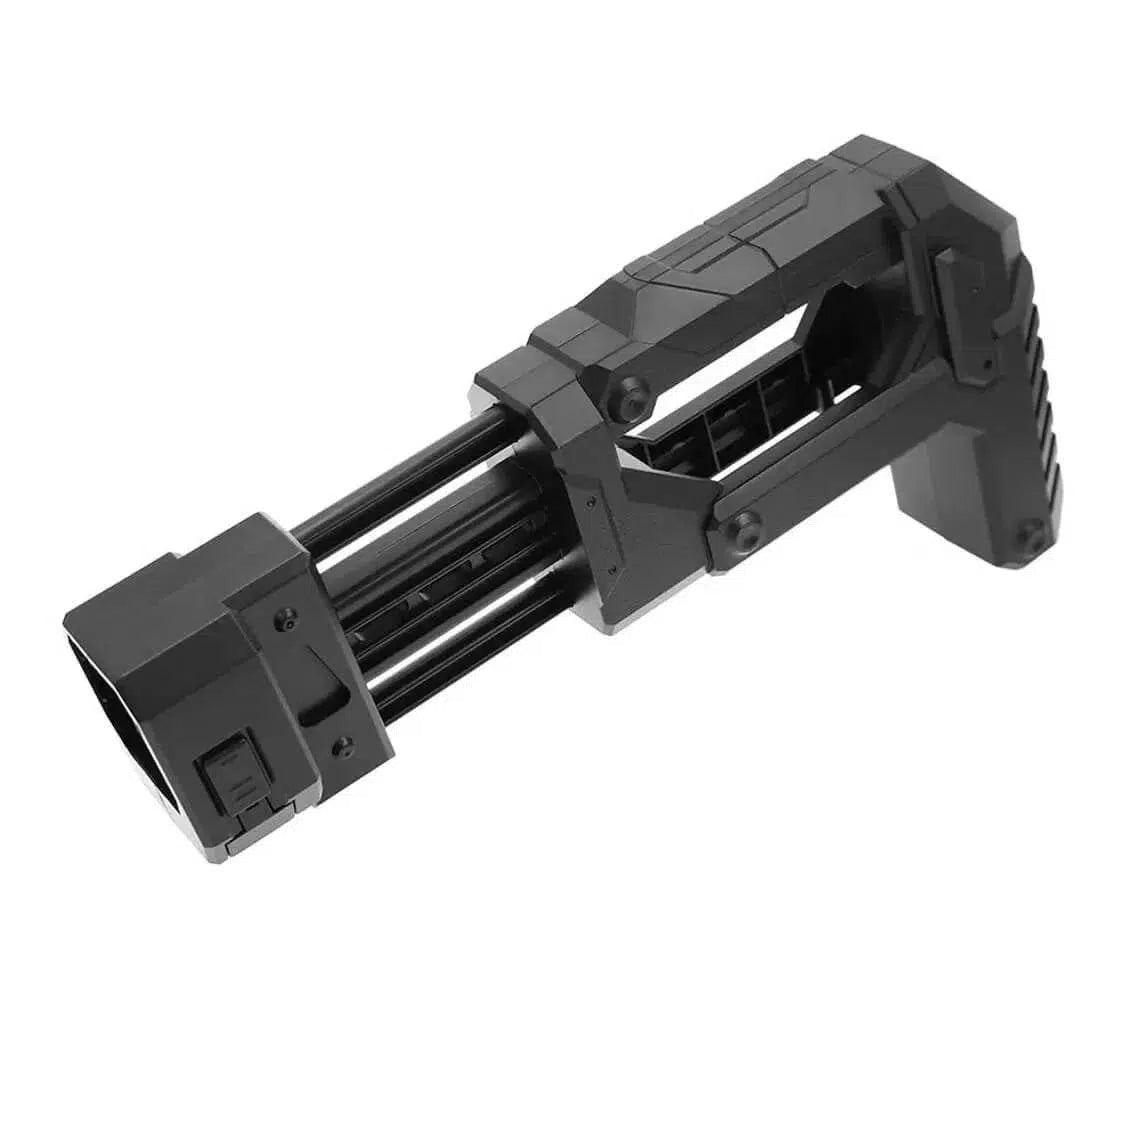 Tactical Storage Fixed Butt Stock for Nerf Blasters-m416gelblaster-m416gelblaster